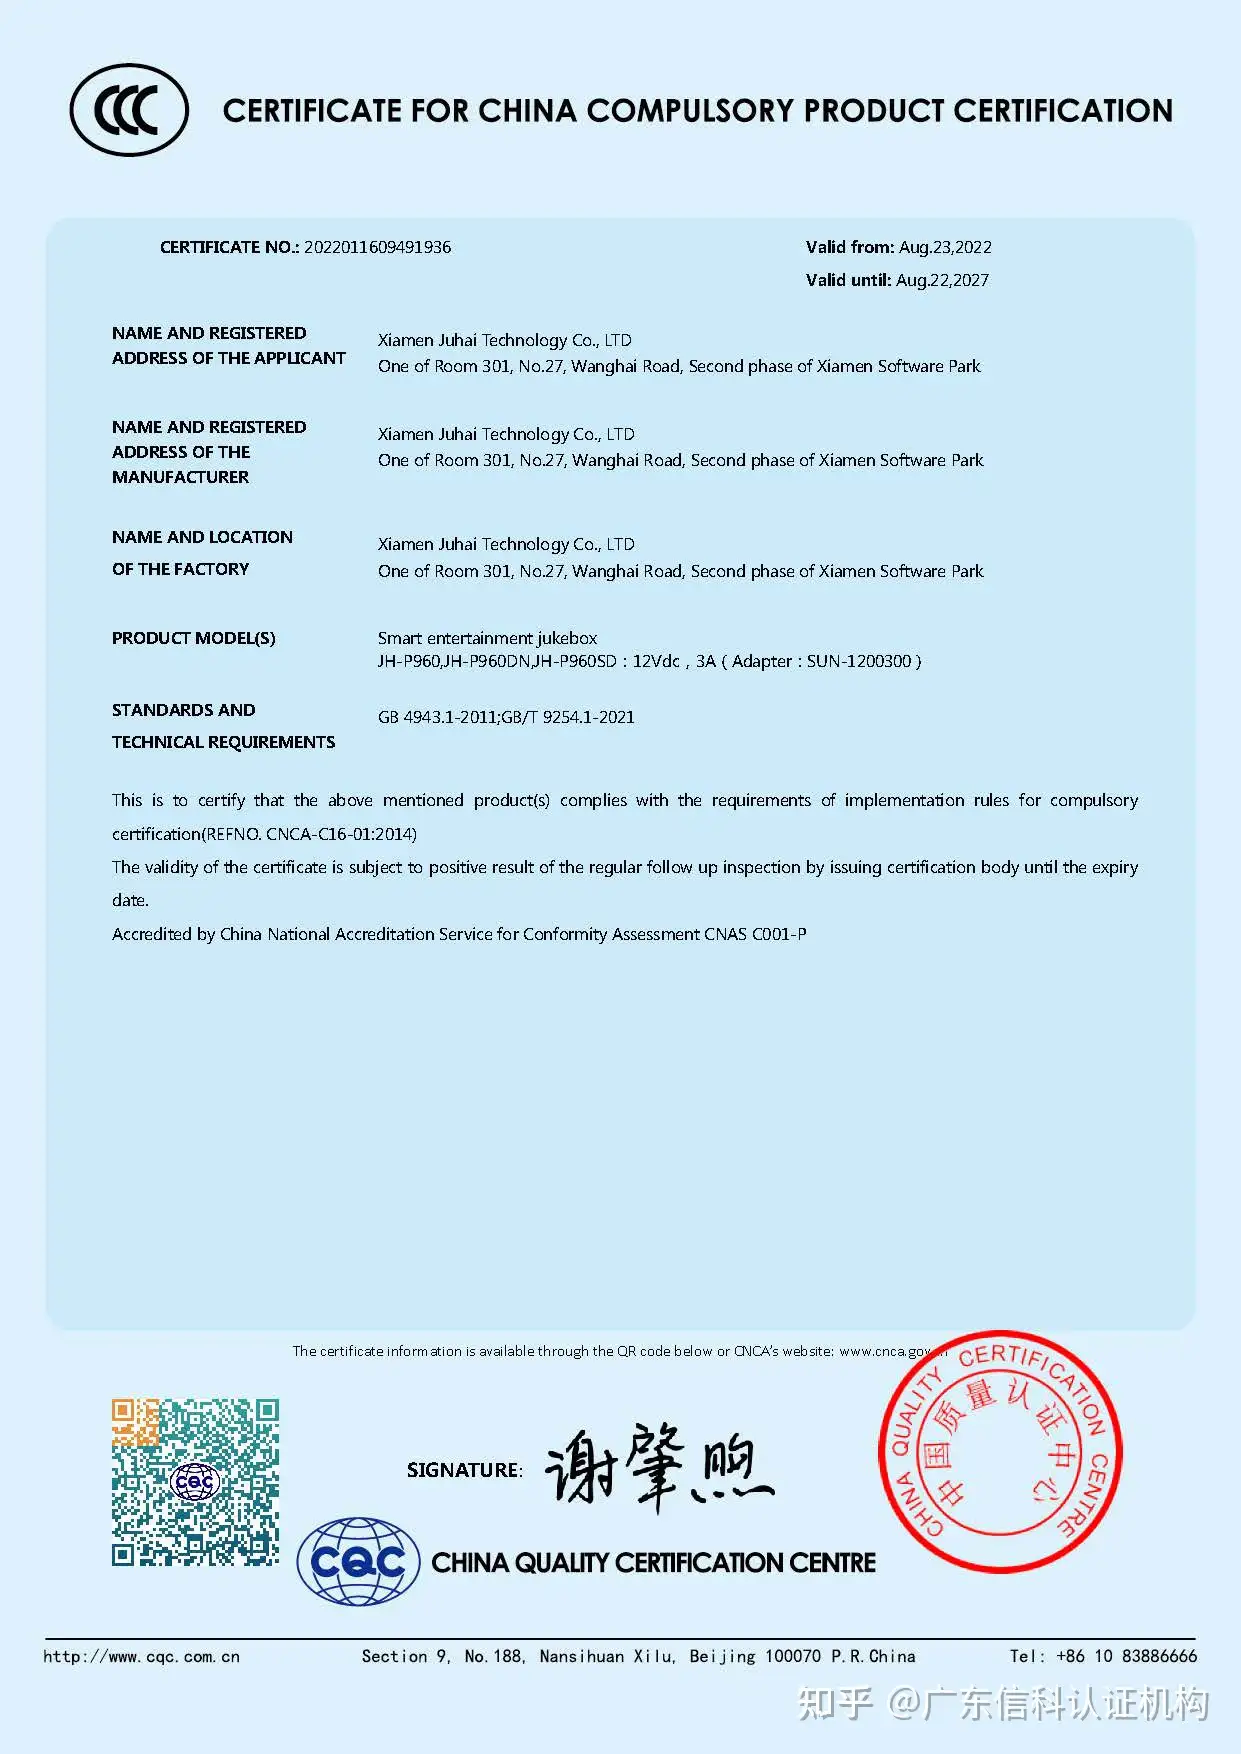 CCC认证China Compulsory Certification 强制性产品认证制度- 知乎